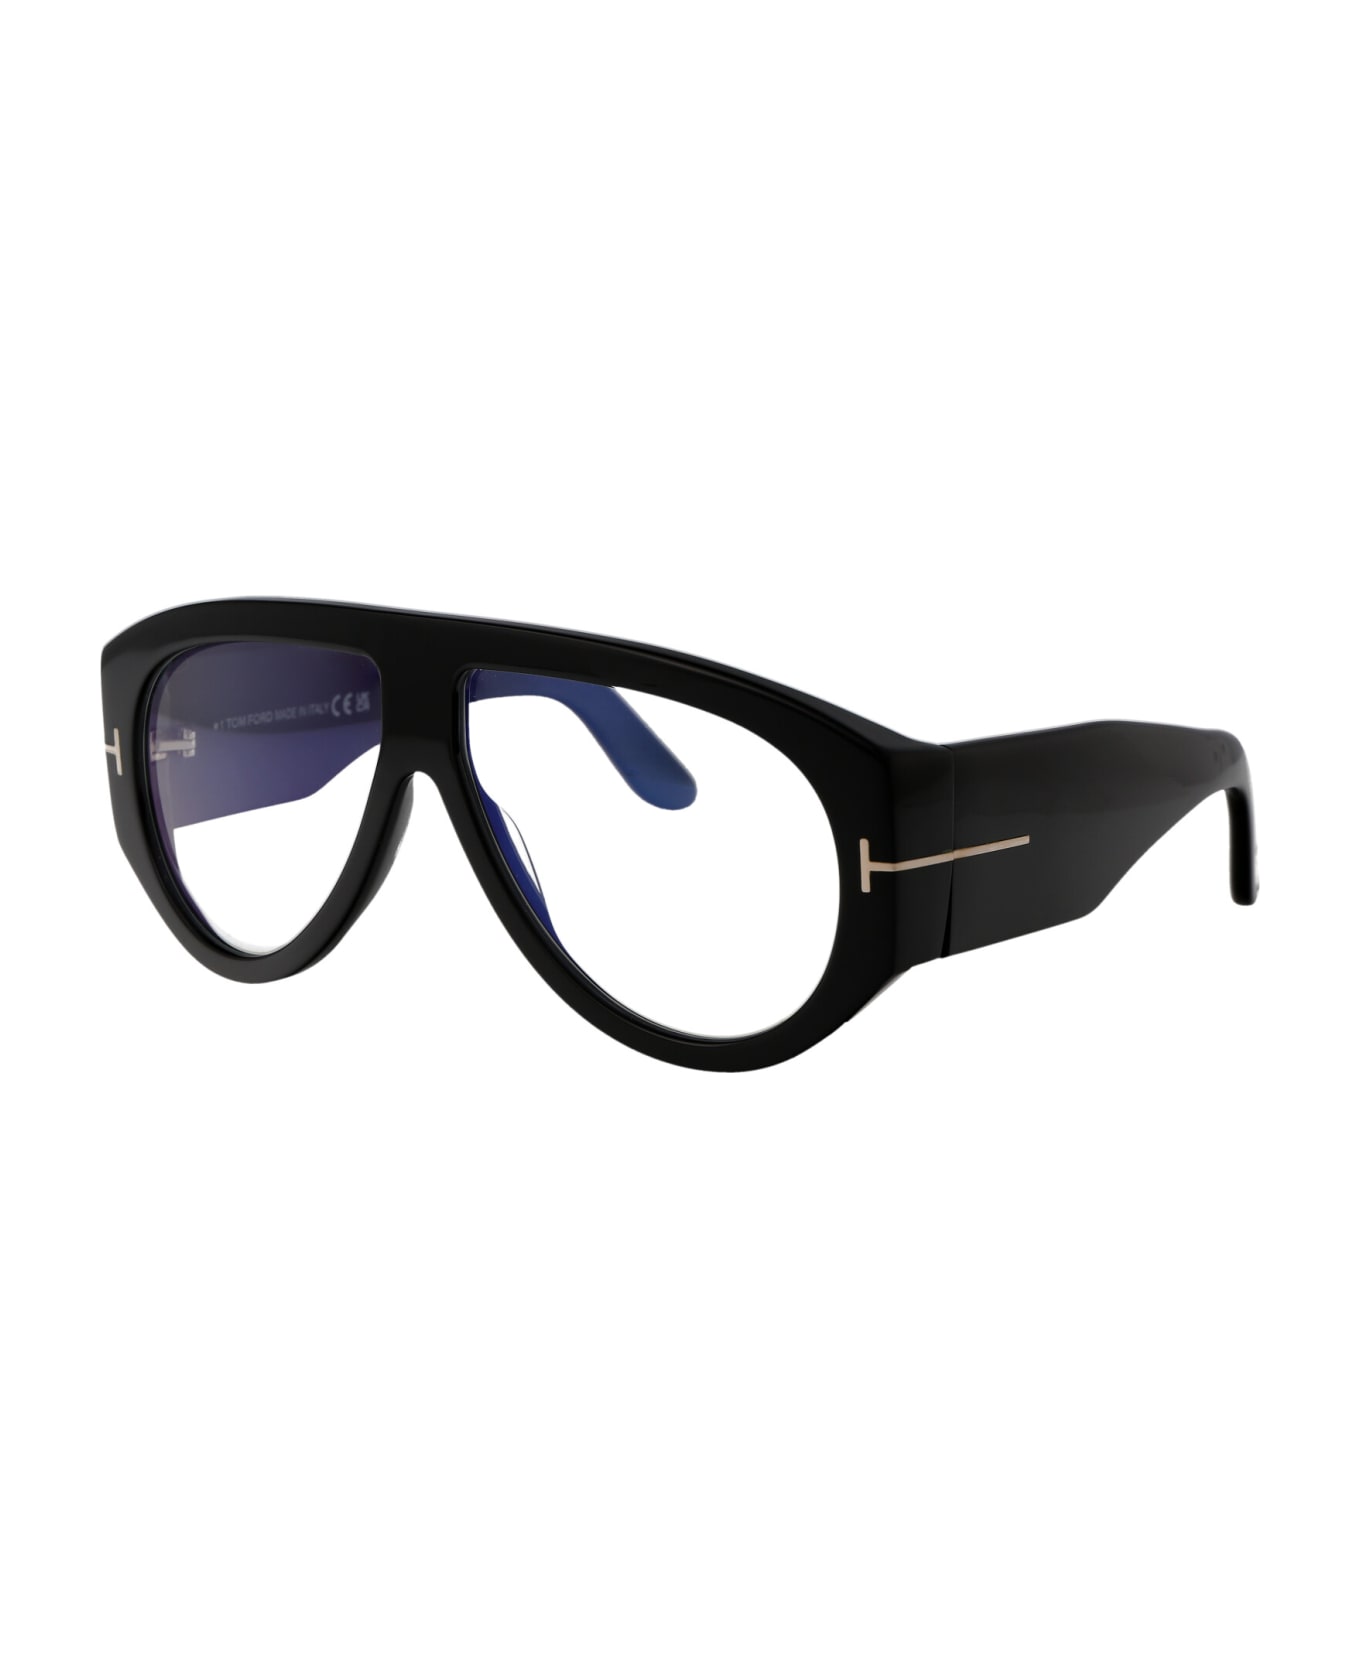 Tom Ford Eyewear Ft5958-b Glasses - 001 Nero Lucido アイウェア